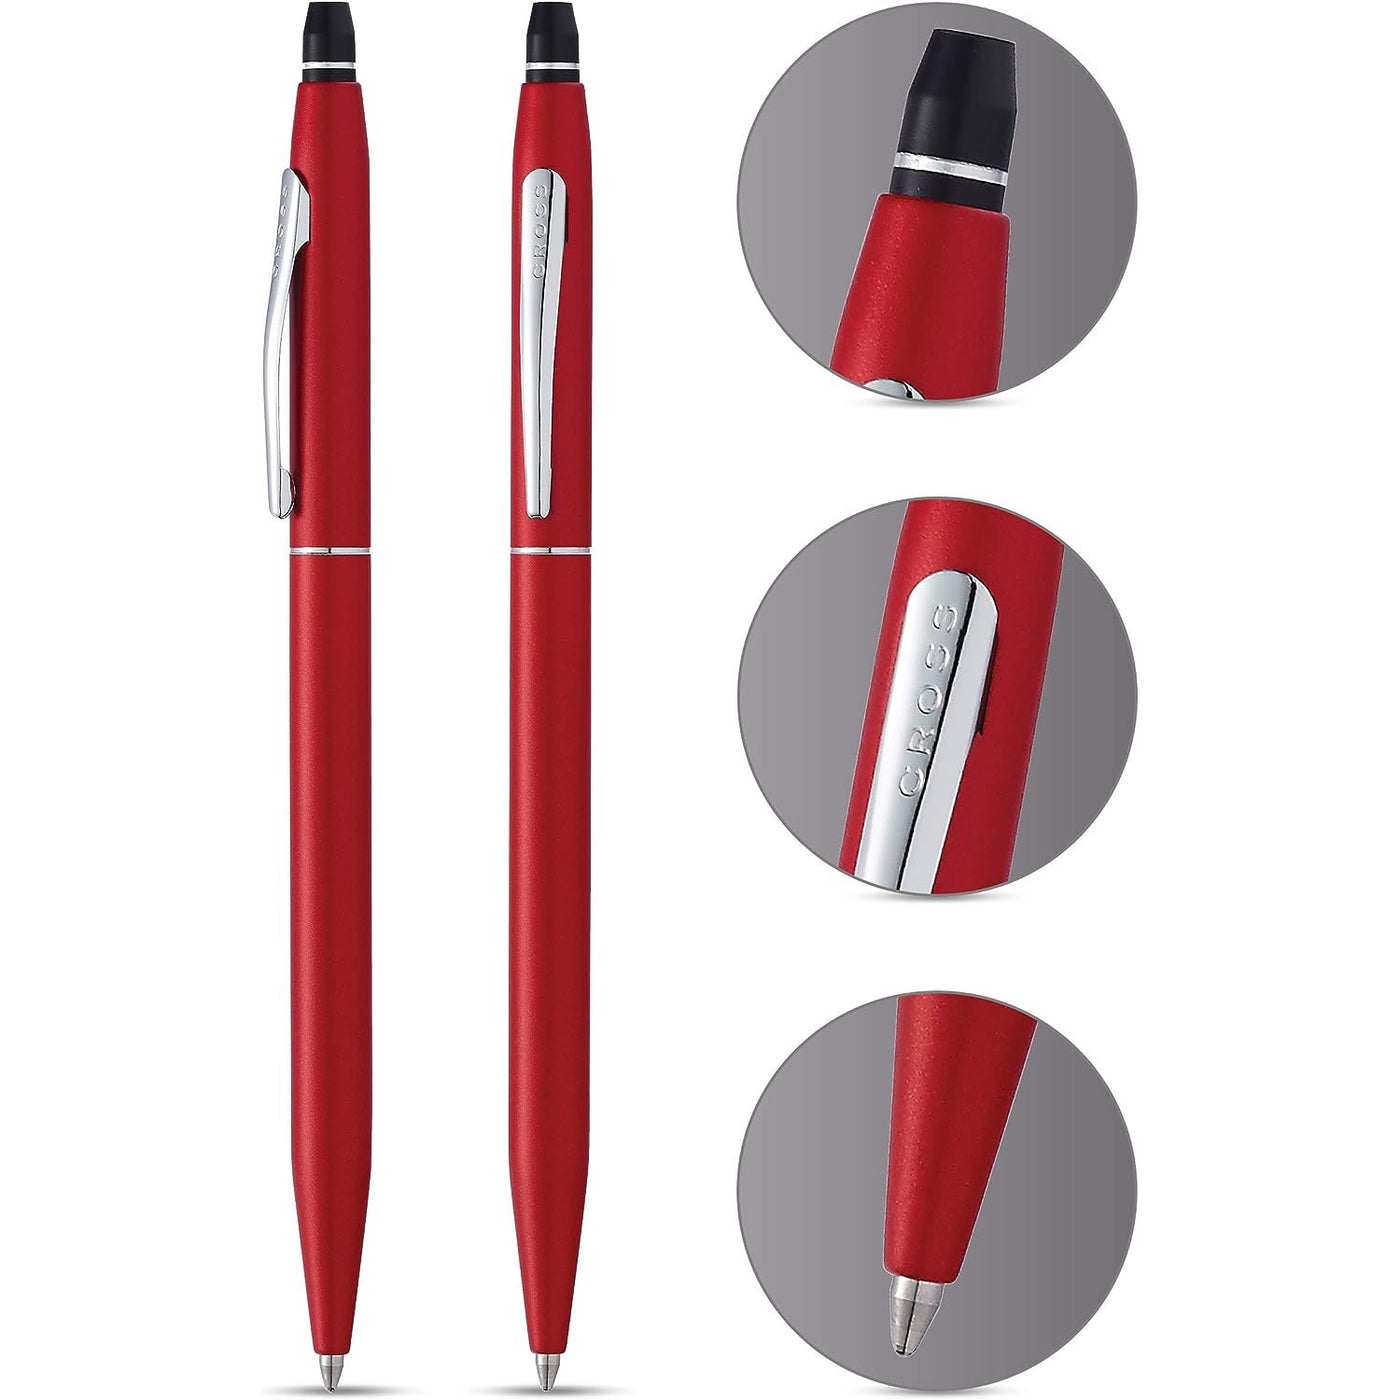 Cross Click Crimson Red Ballpoint Pen